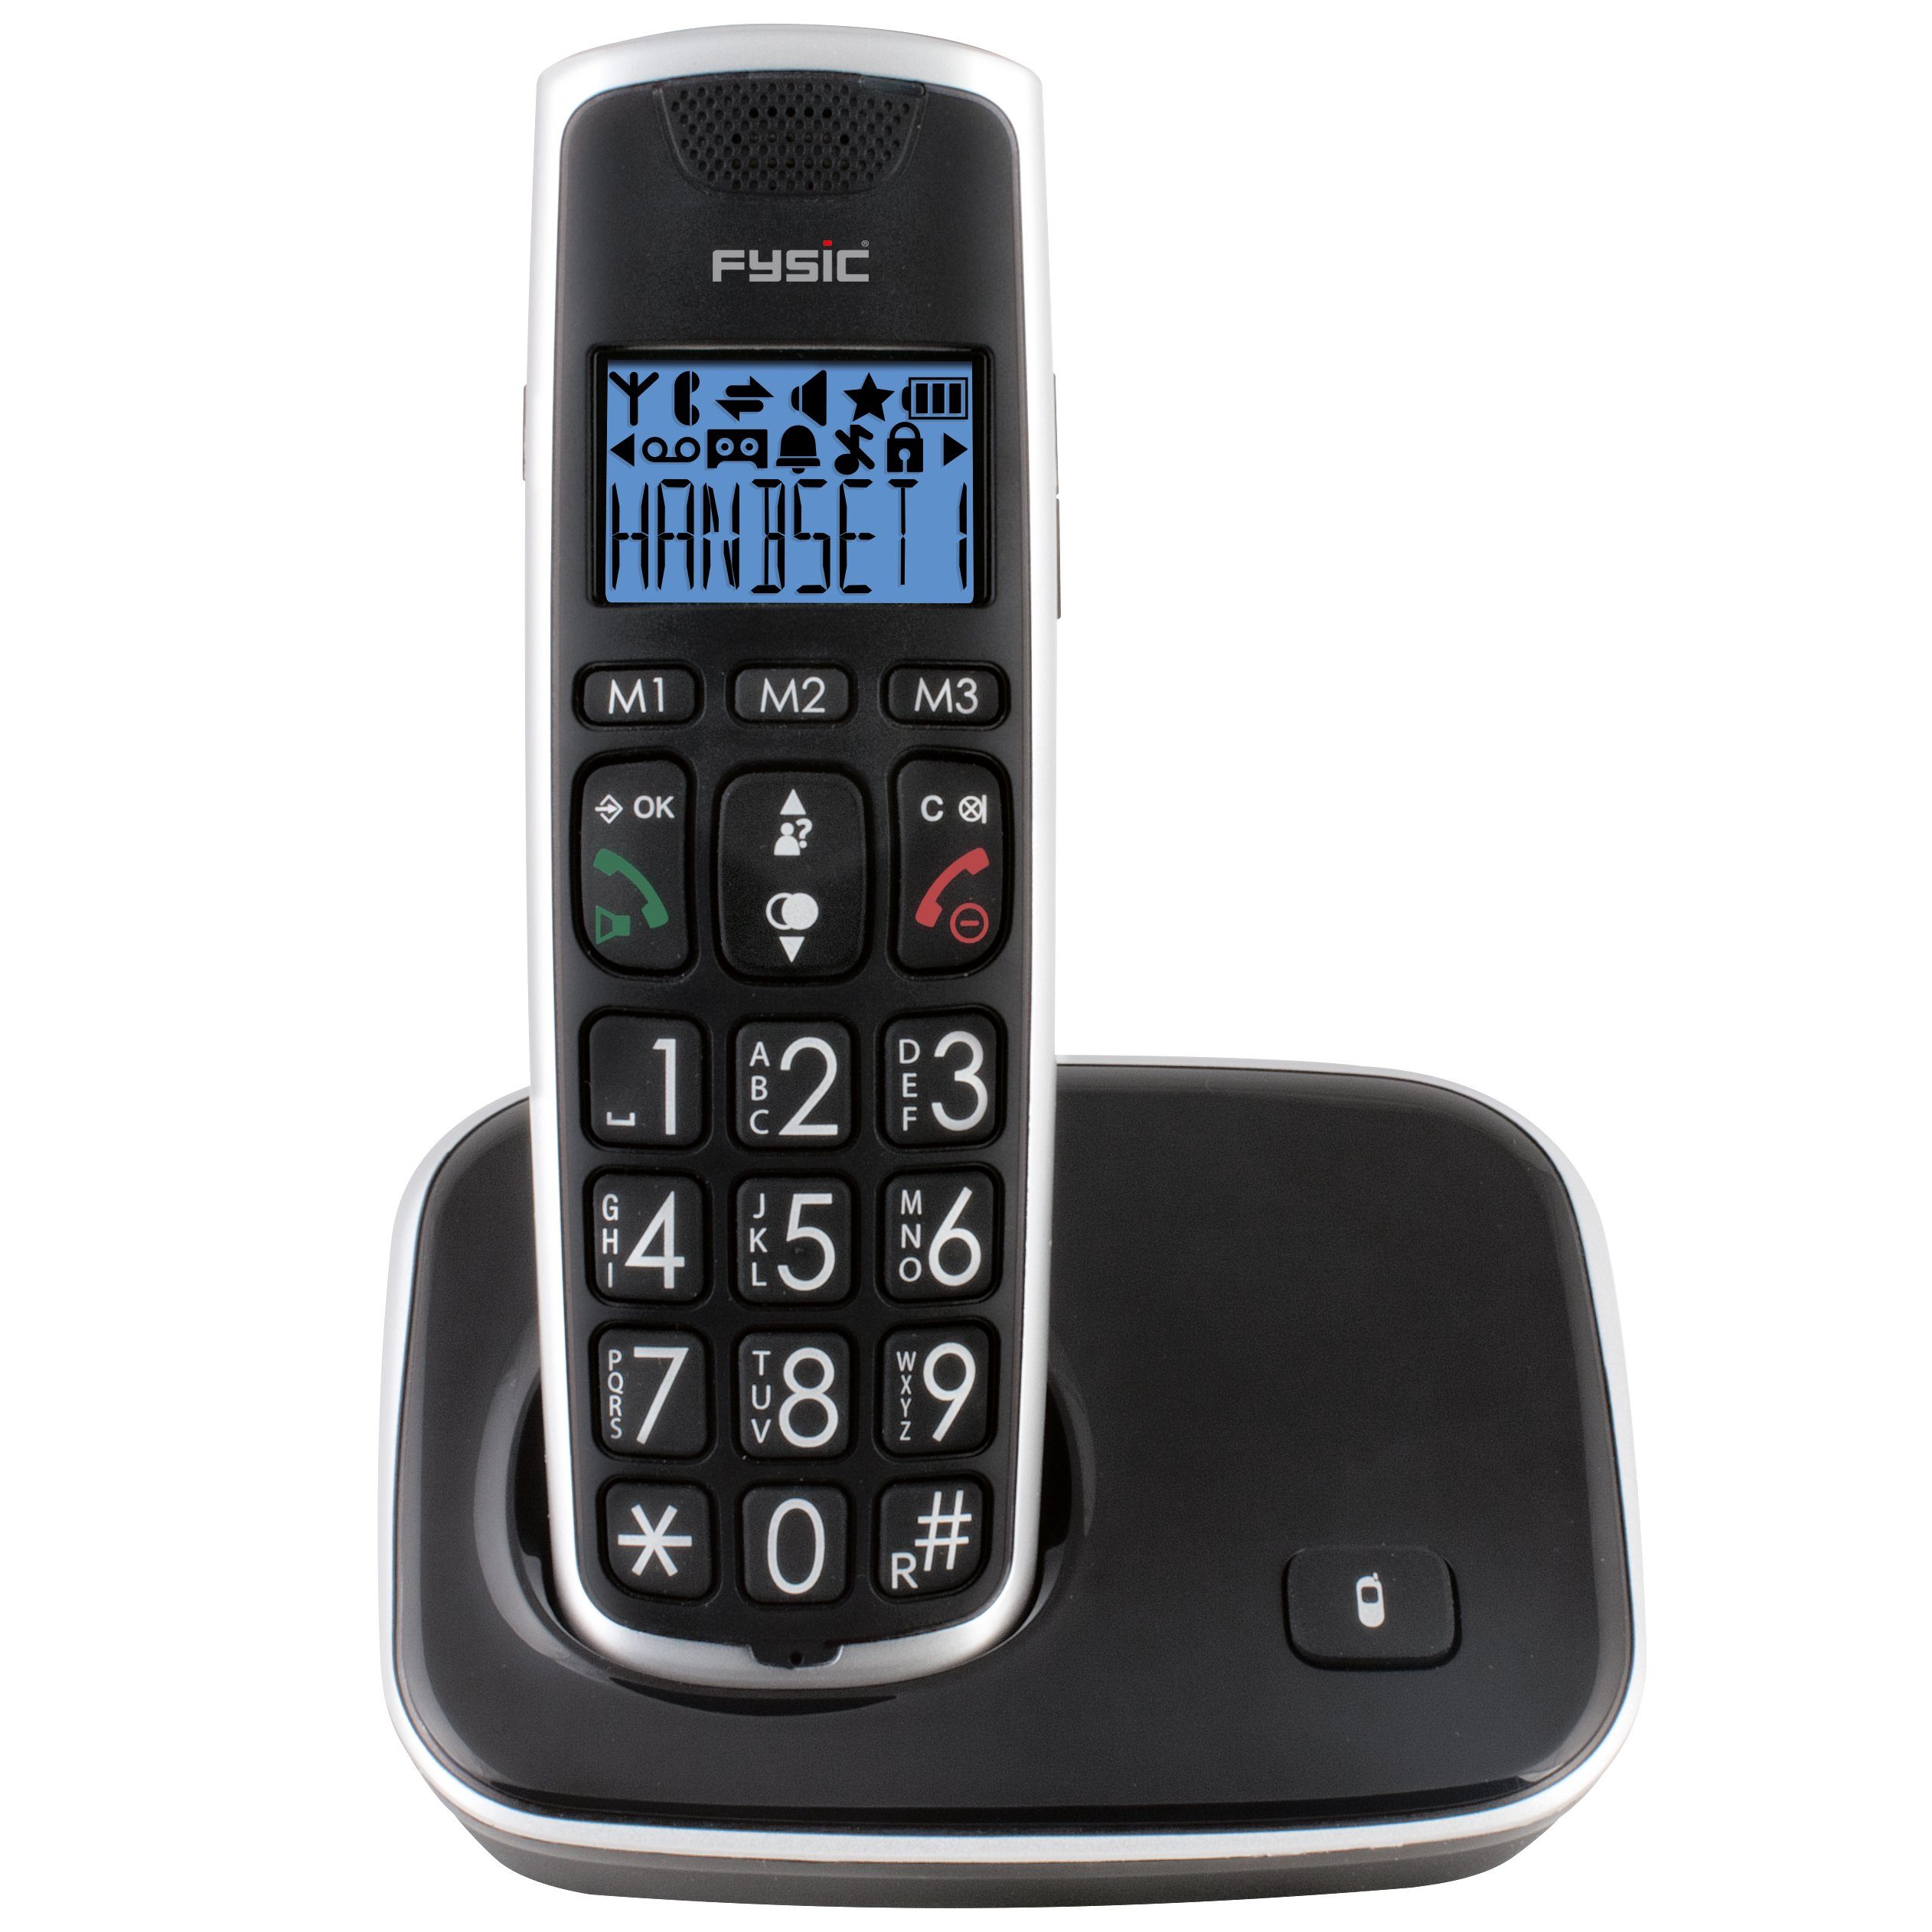 1, (Mobilteile: V 100-240 Netzspannung Fysic FX-6000 AC) Festnetztelefon